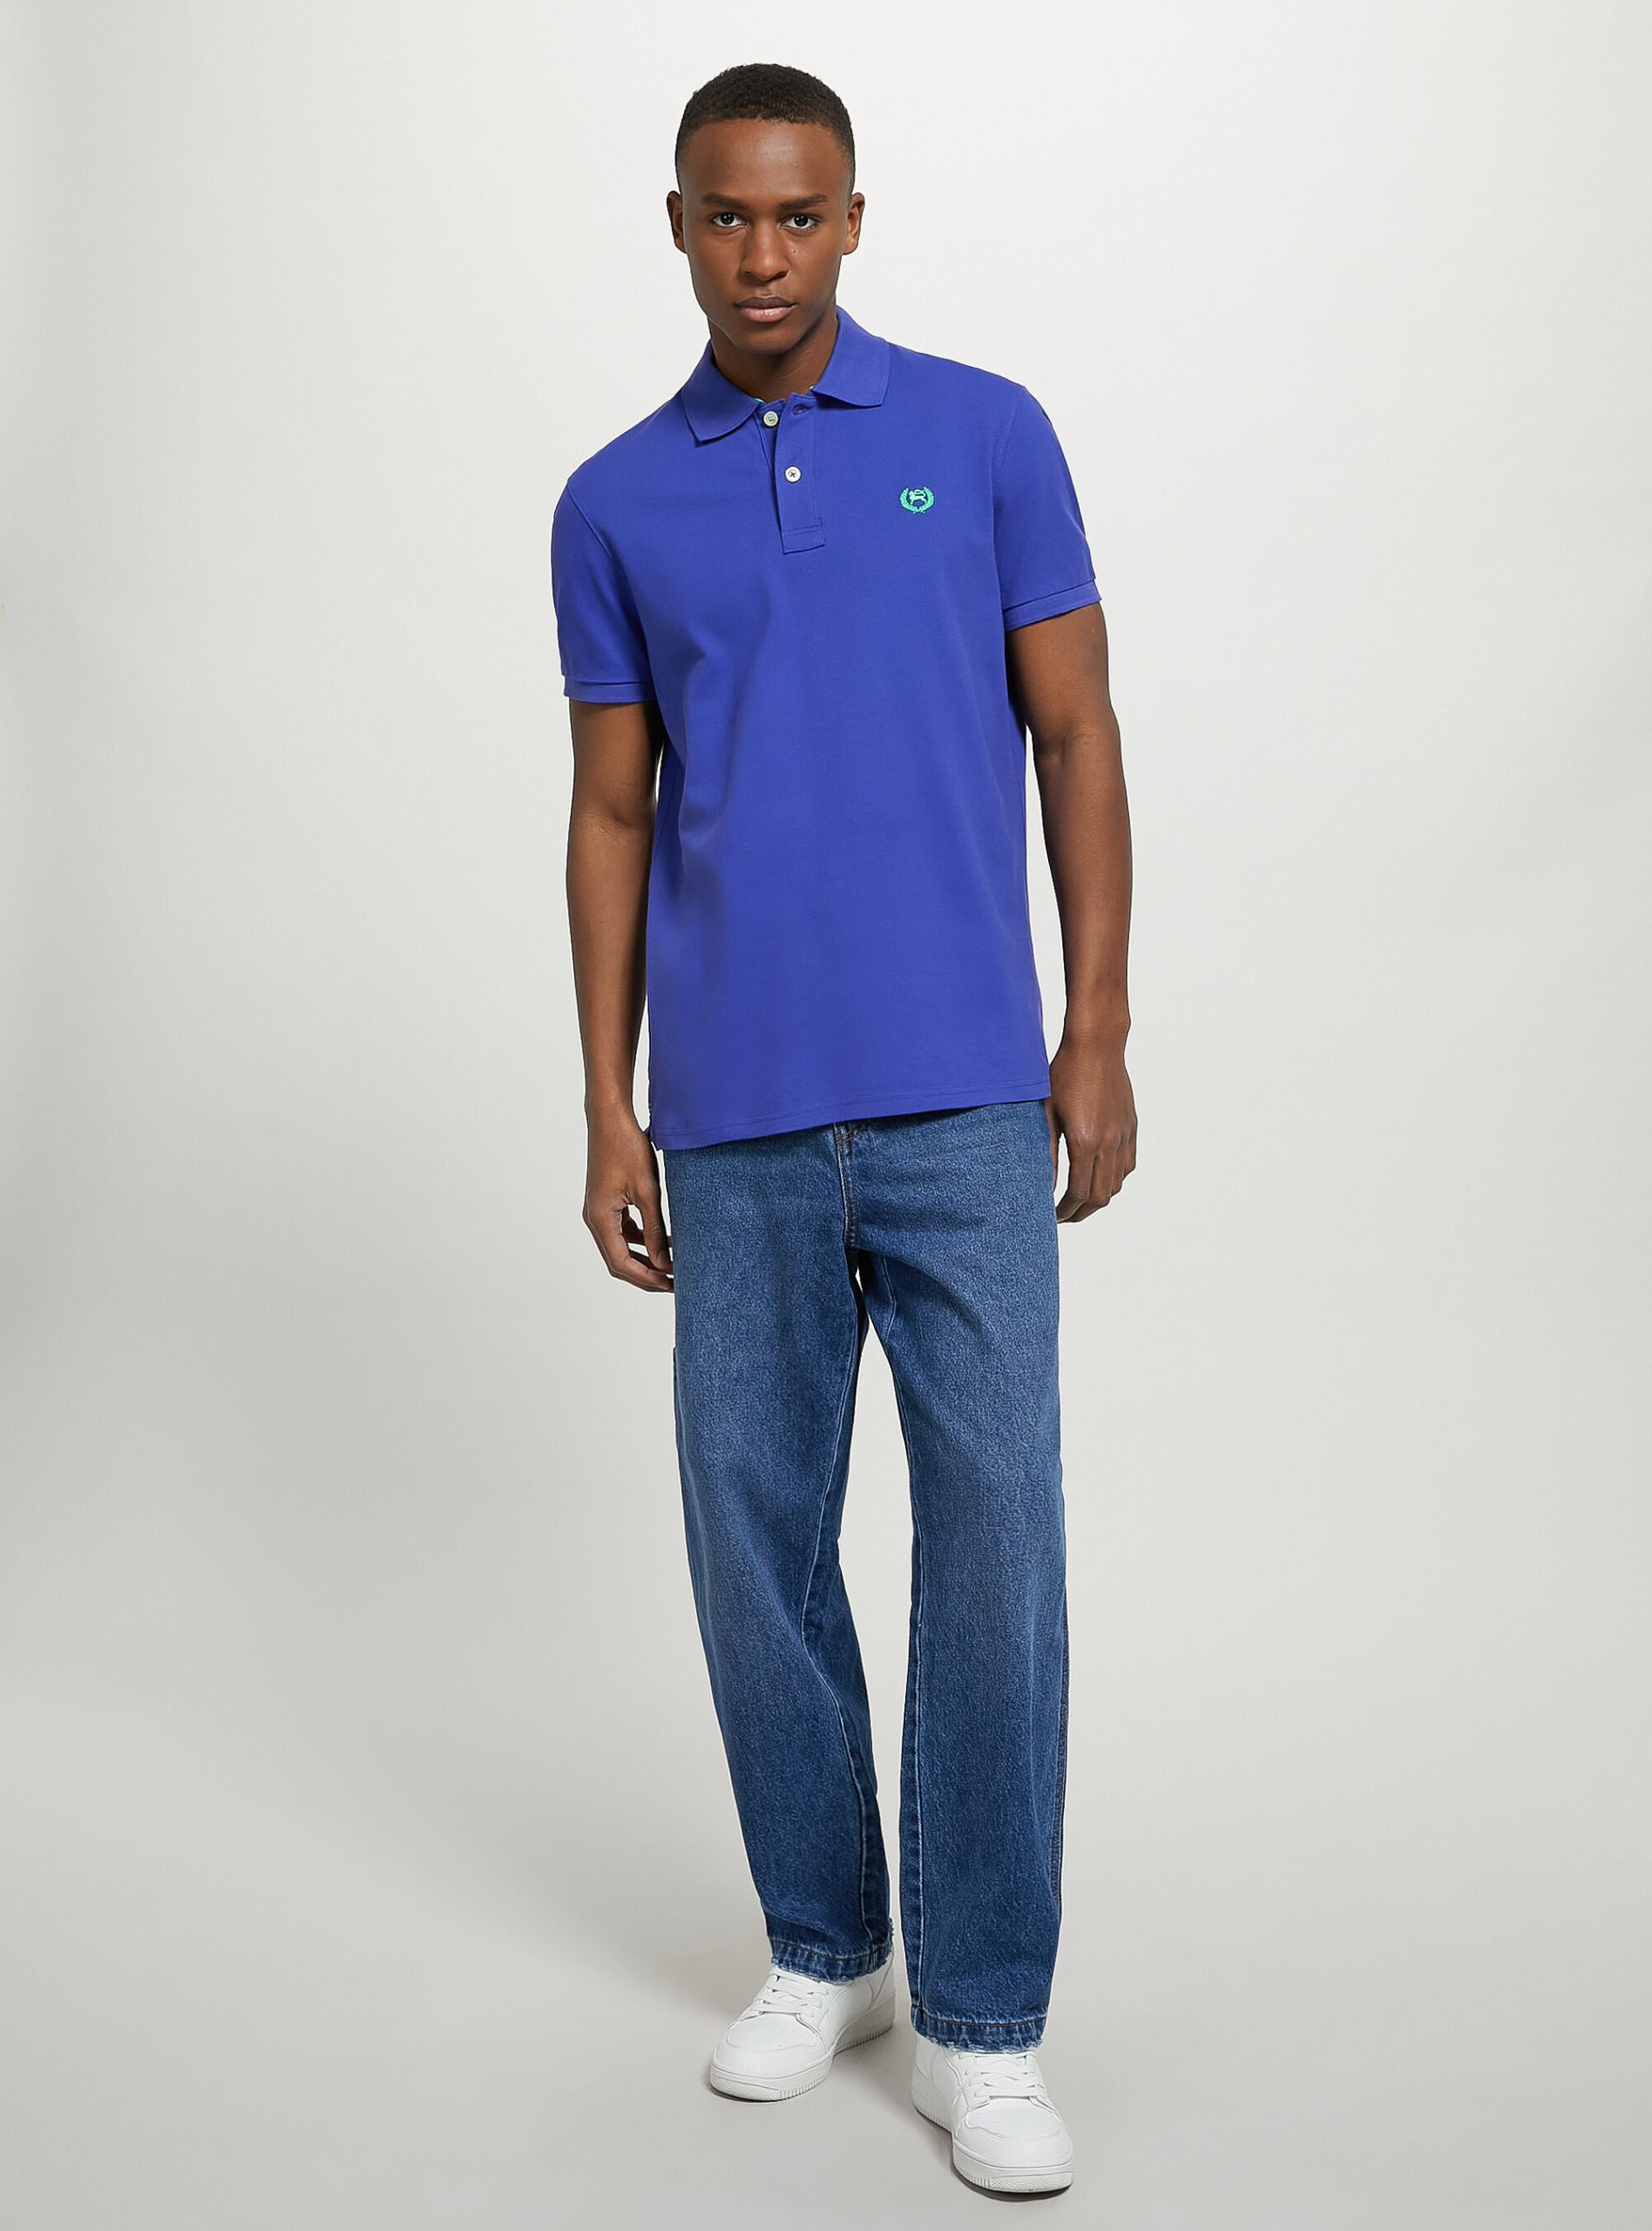 Vi1 Violet Dark Männer Cotton Piqué Polo Shirt With Embroidery Prozentualer Rabatt Alcott Polo – 2